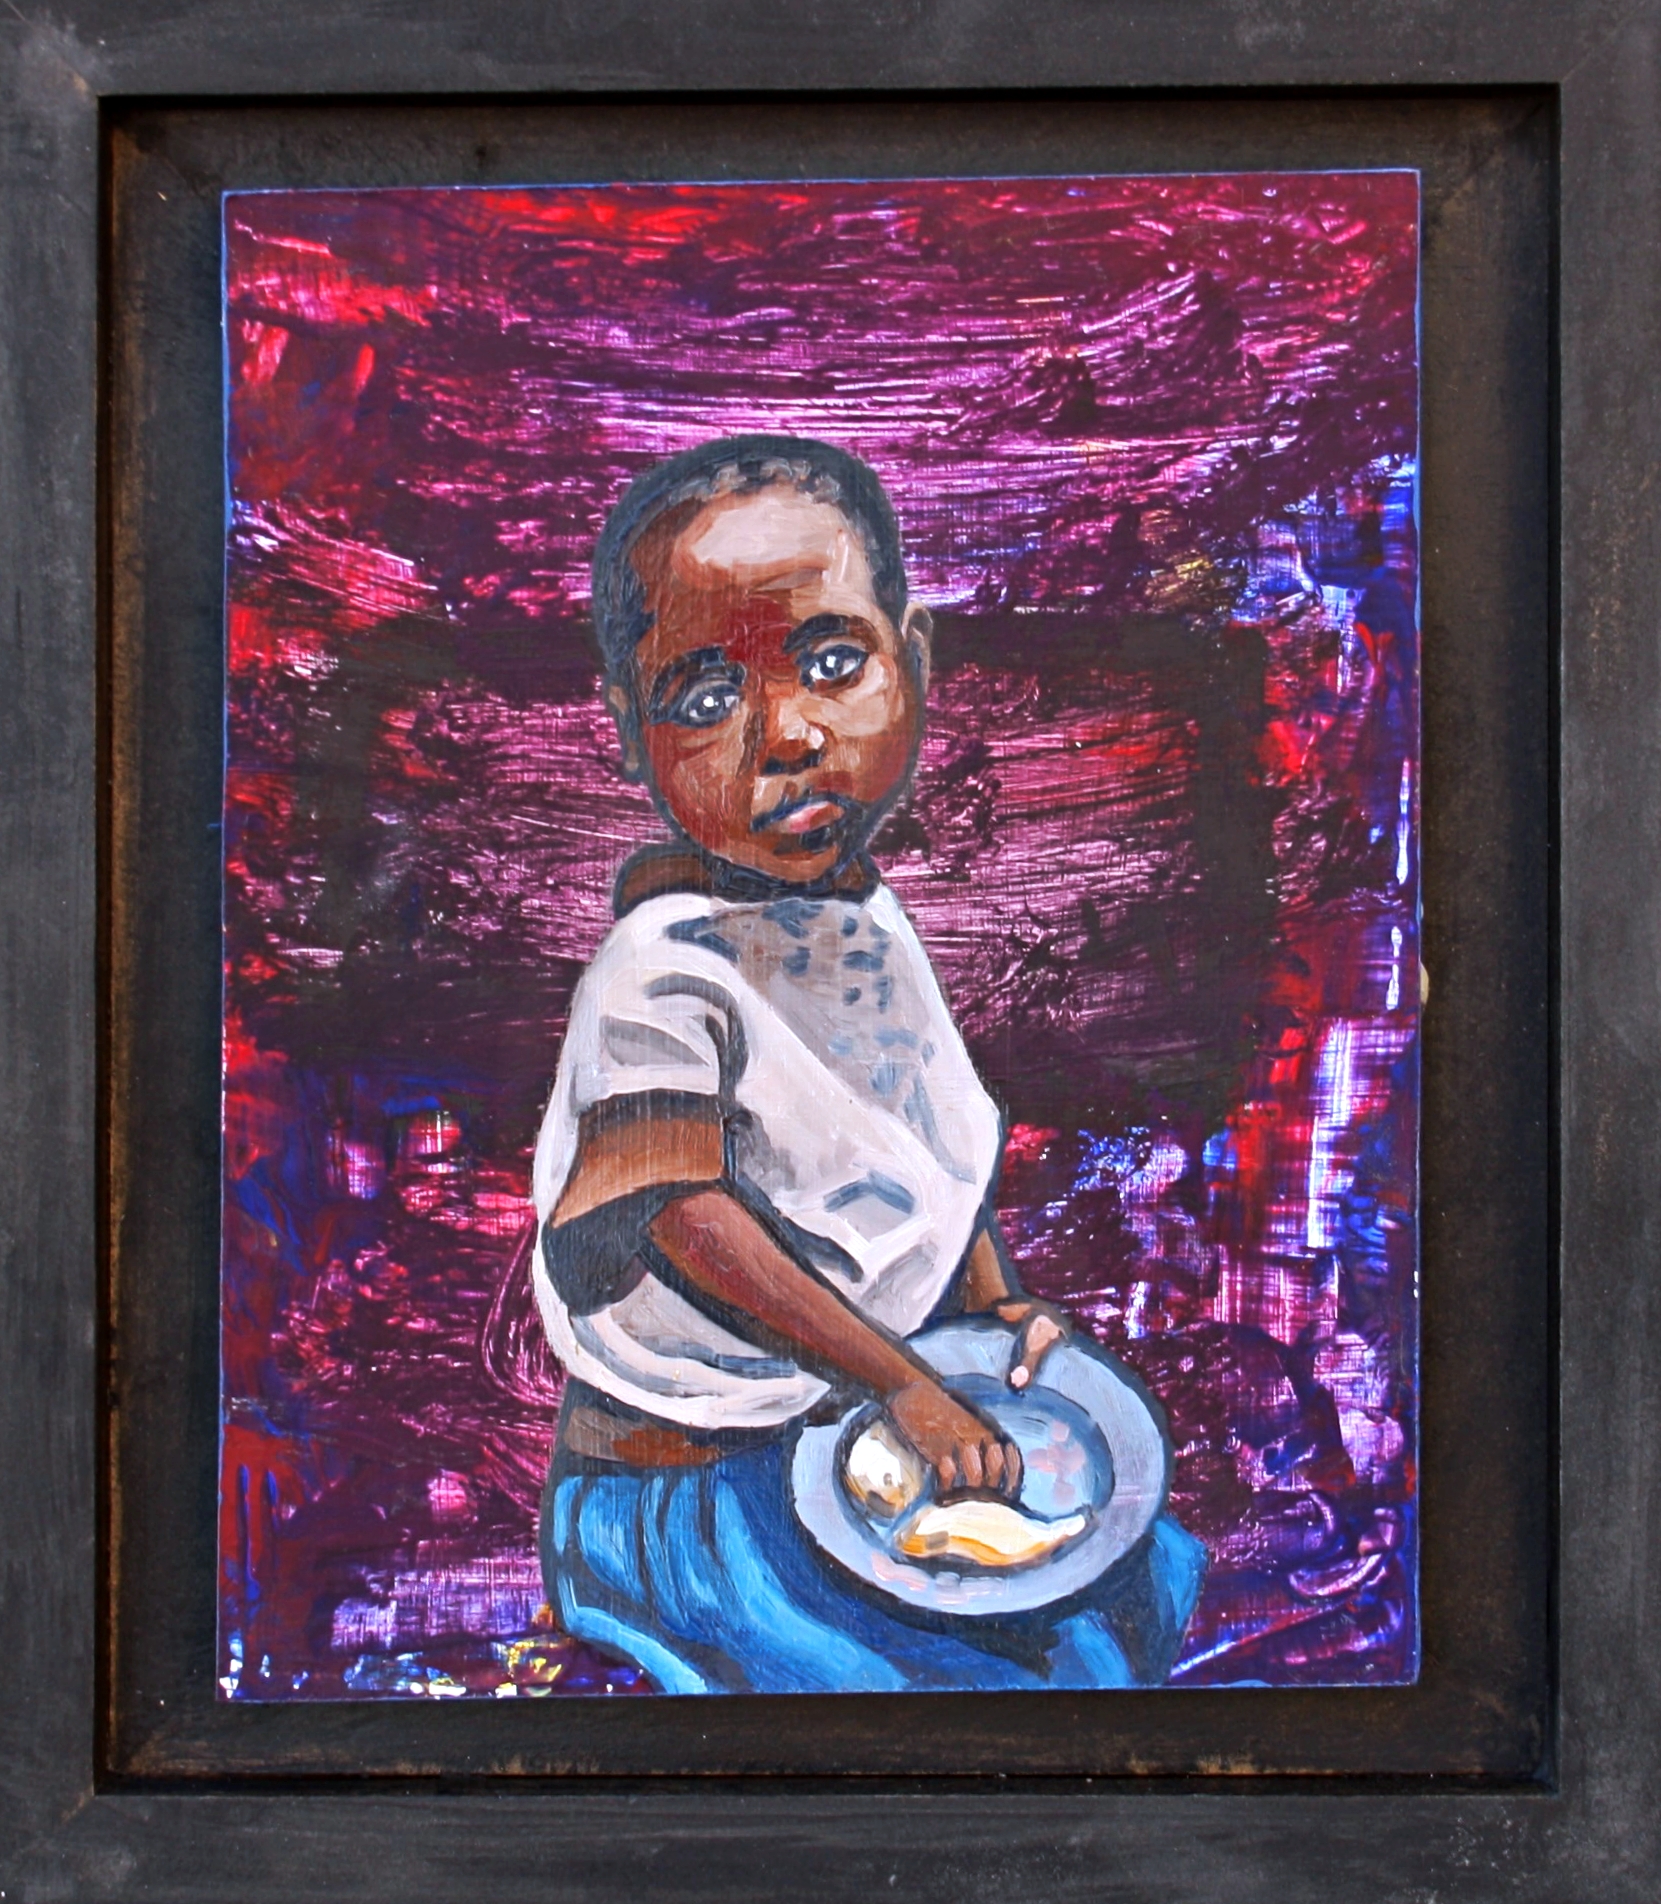 school art artist geoff phillips maple creek home of hope images children africa rwanda kenya india child baby dream centre alberta canada paint painting feeding program 